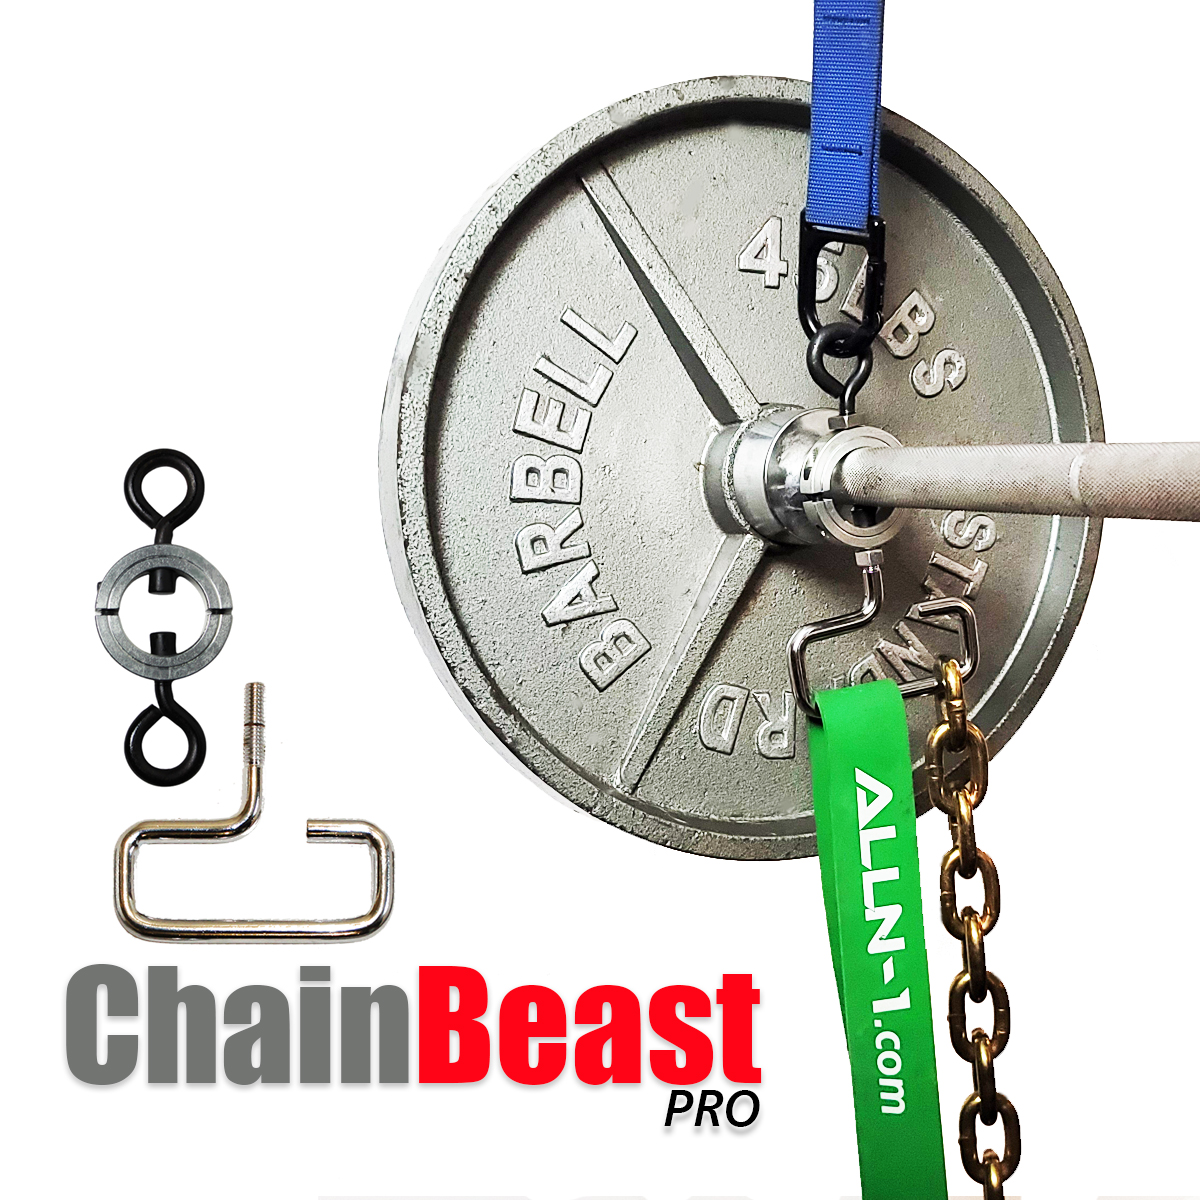 F2 ChainBeast